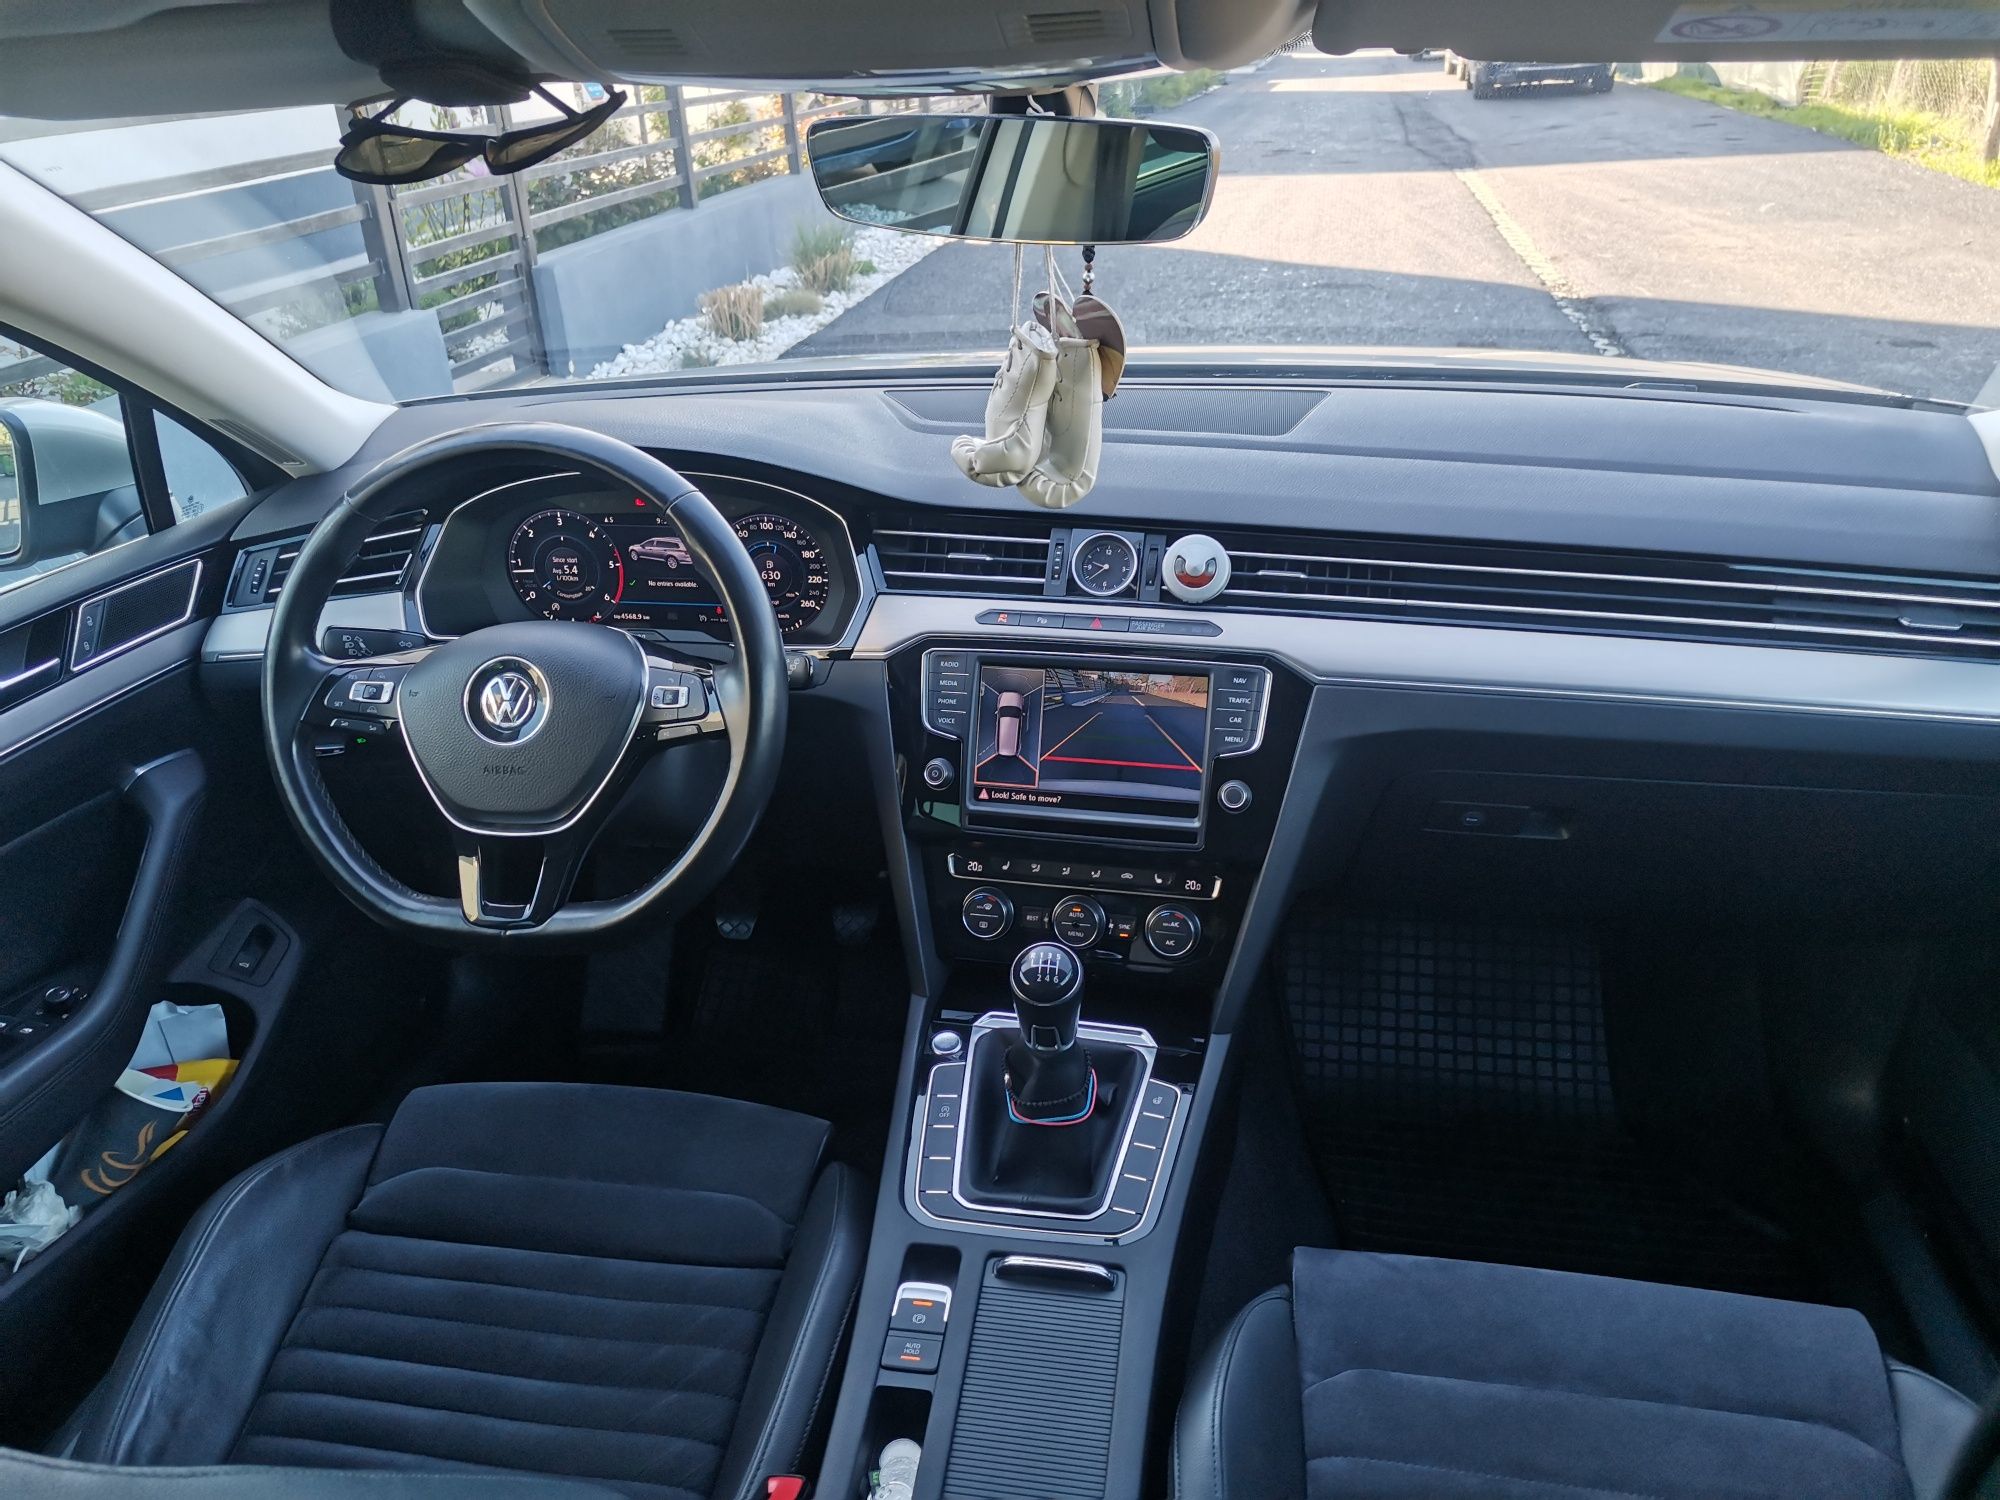 2017 Volkswagen Passat, 1.6 TDI, Piele, Camere 360, Jante 17'